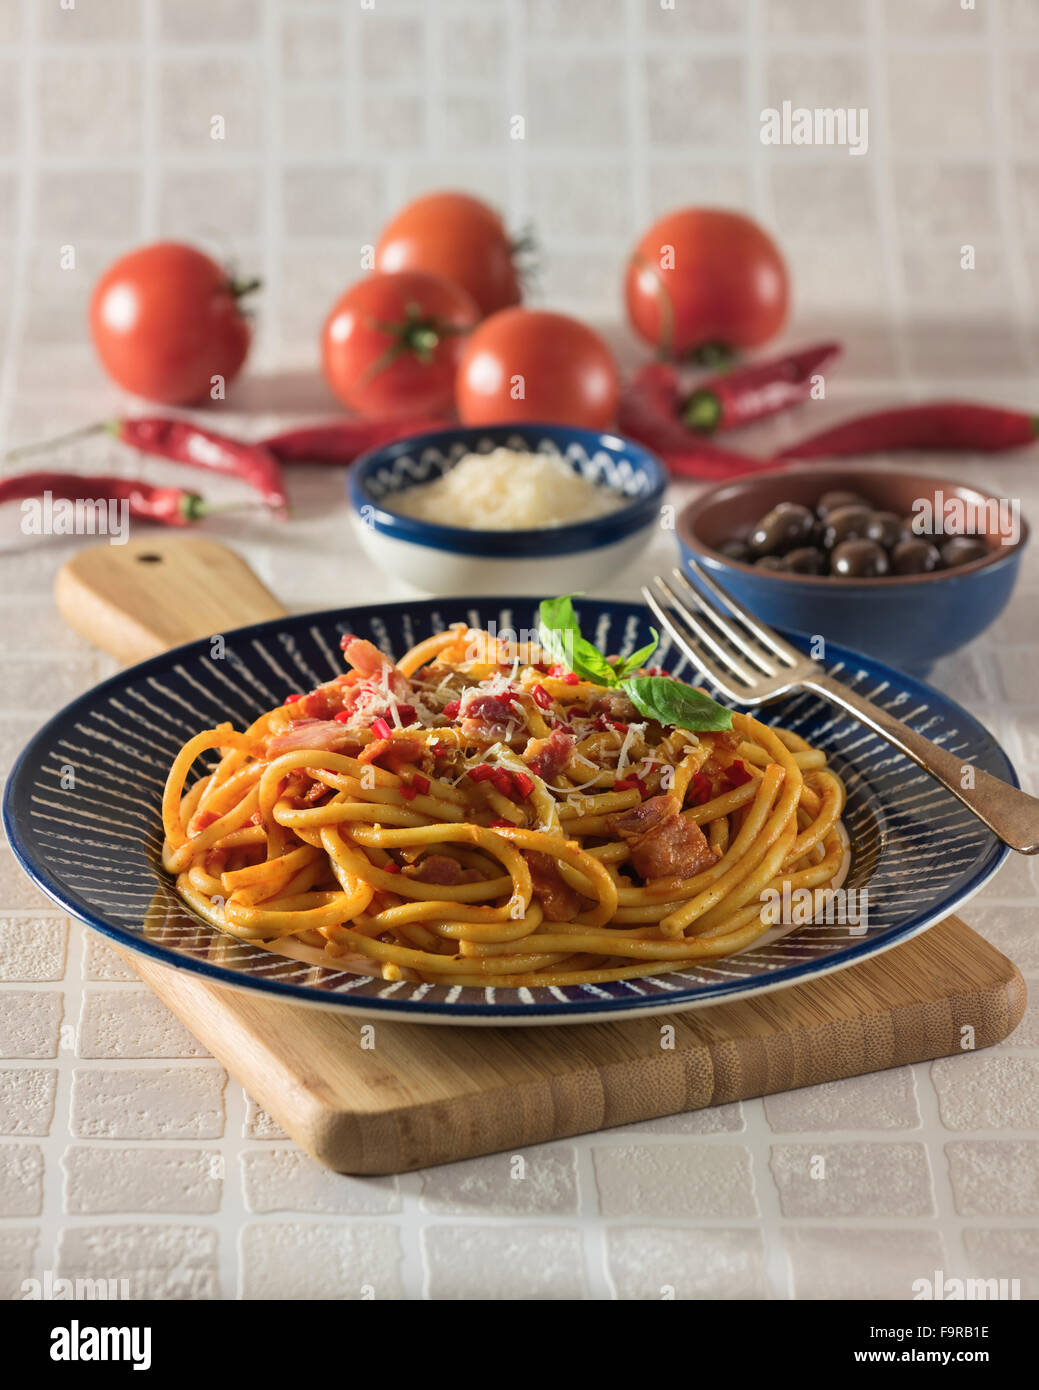 Bucatini all'amatriciana. Pasta mit Speck und Tomatensauce. Italienisches Essen. Stockfoto